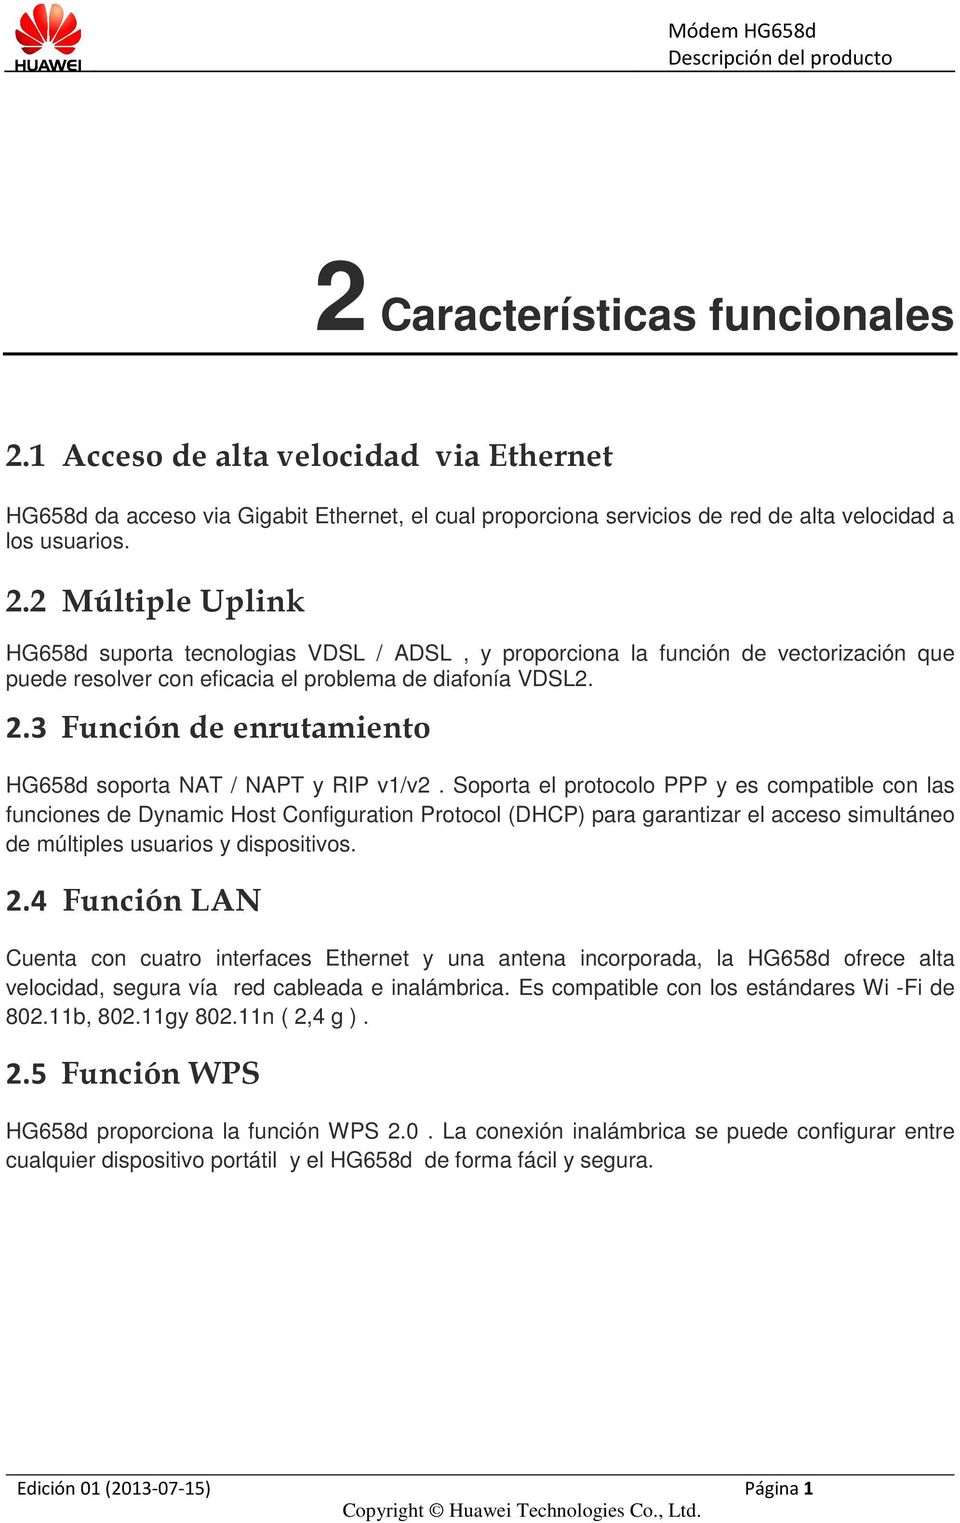 Modem Residencial VDSL2 HG658d Descripción de Producto - PDF Free Download